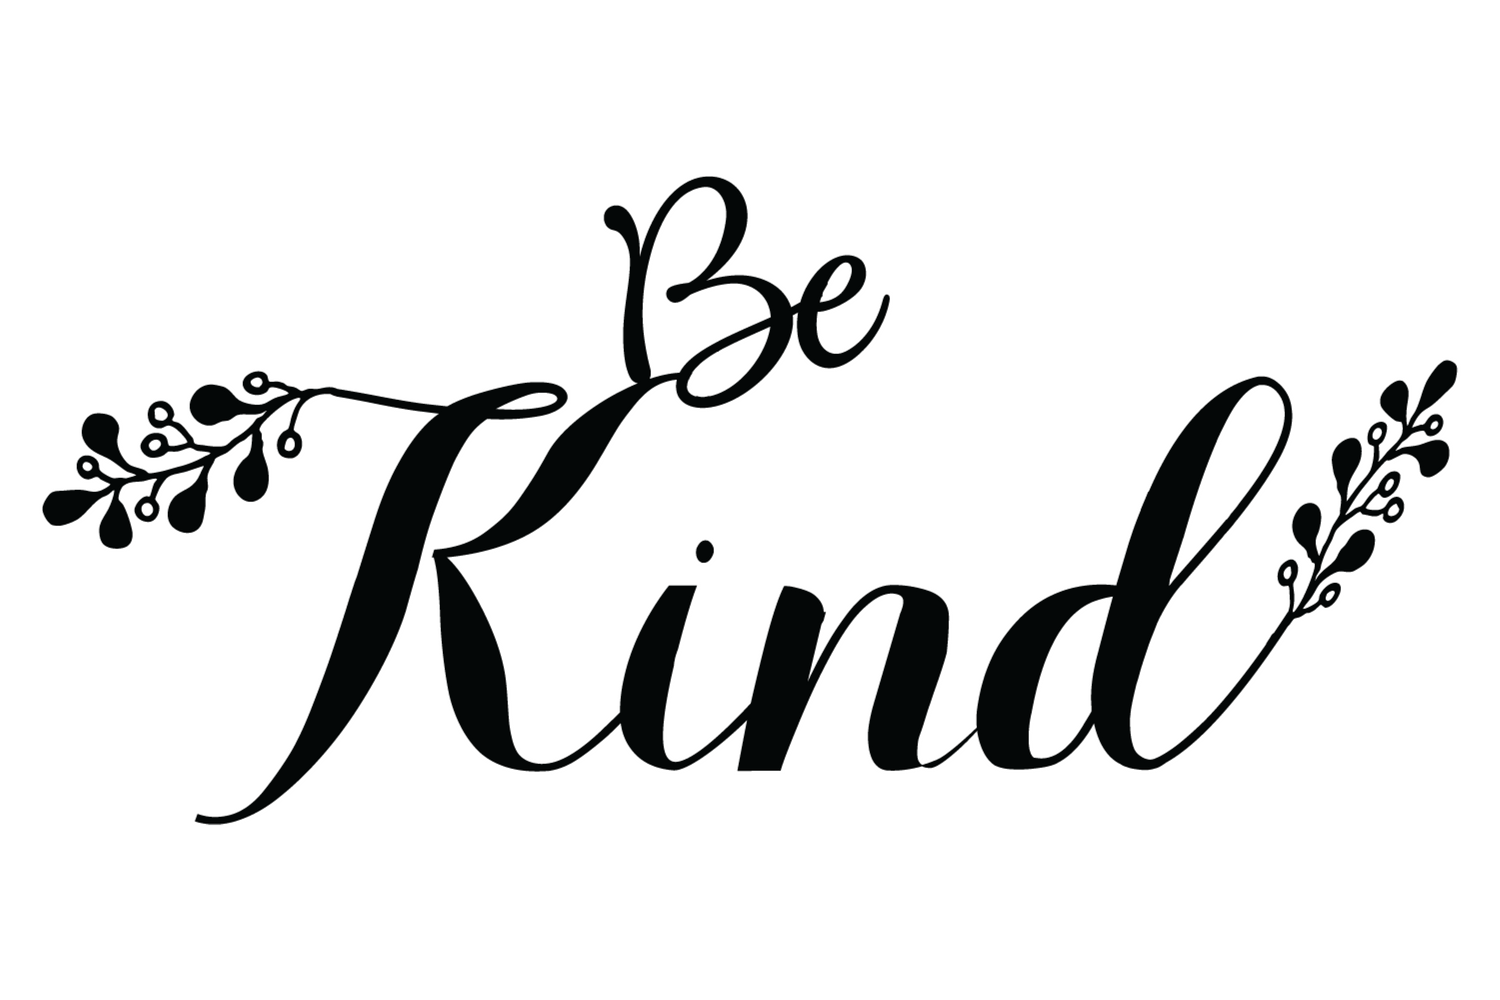 Be kind nature. Be kind. Kind надпись. Be kind logo. Надпись Kindness.